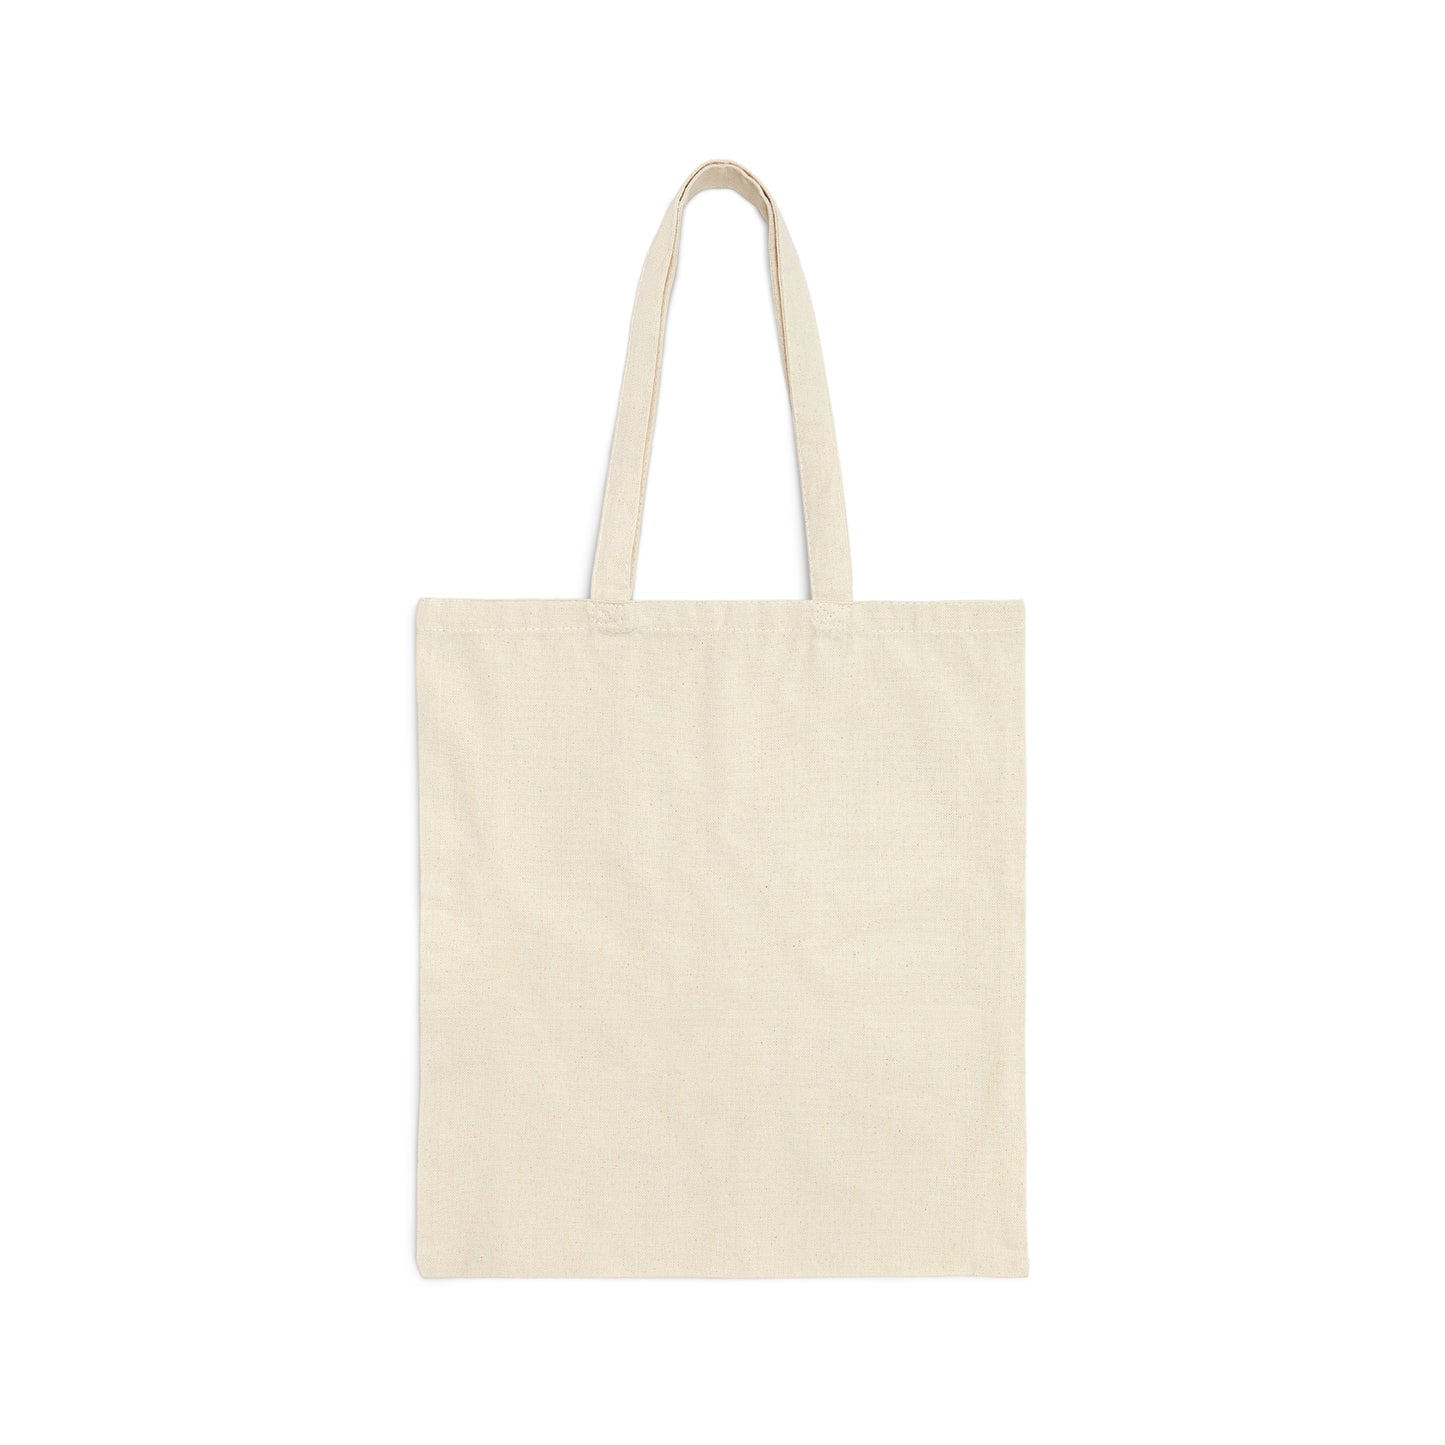 Faith, Hope, & Charity Cotton Canvas Tote Bag